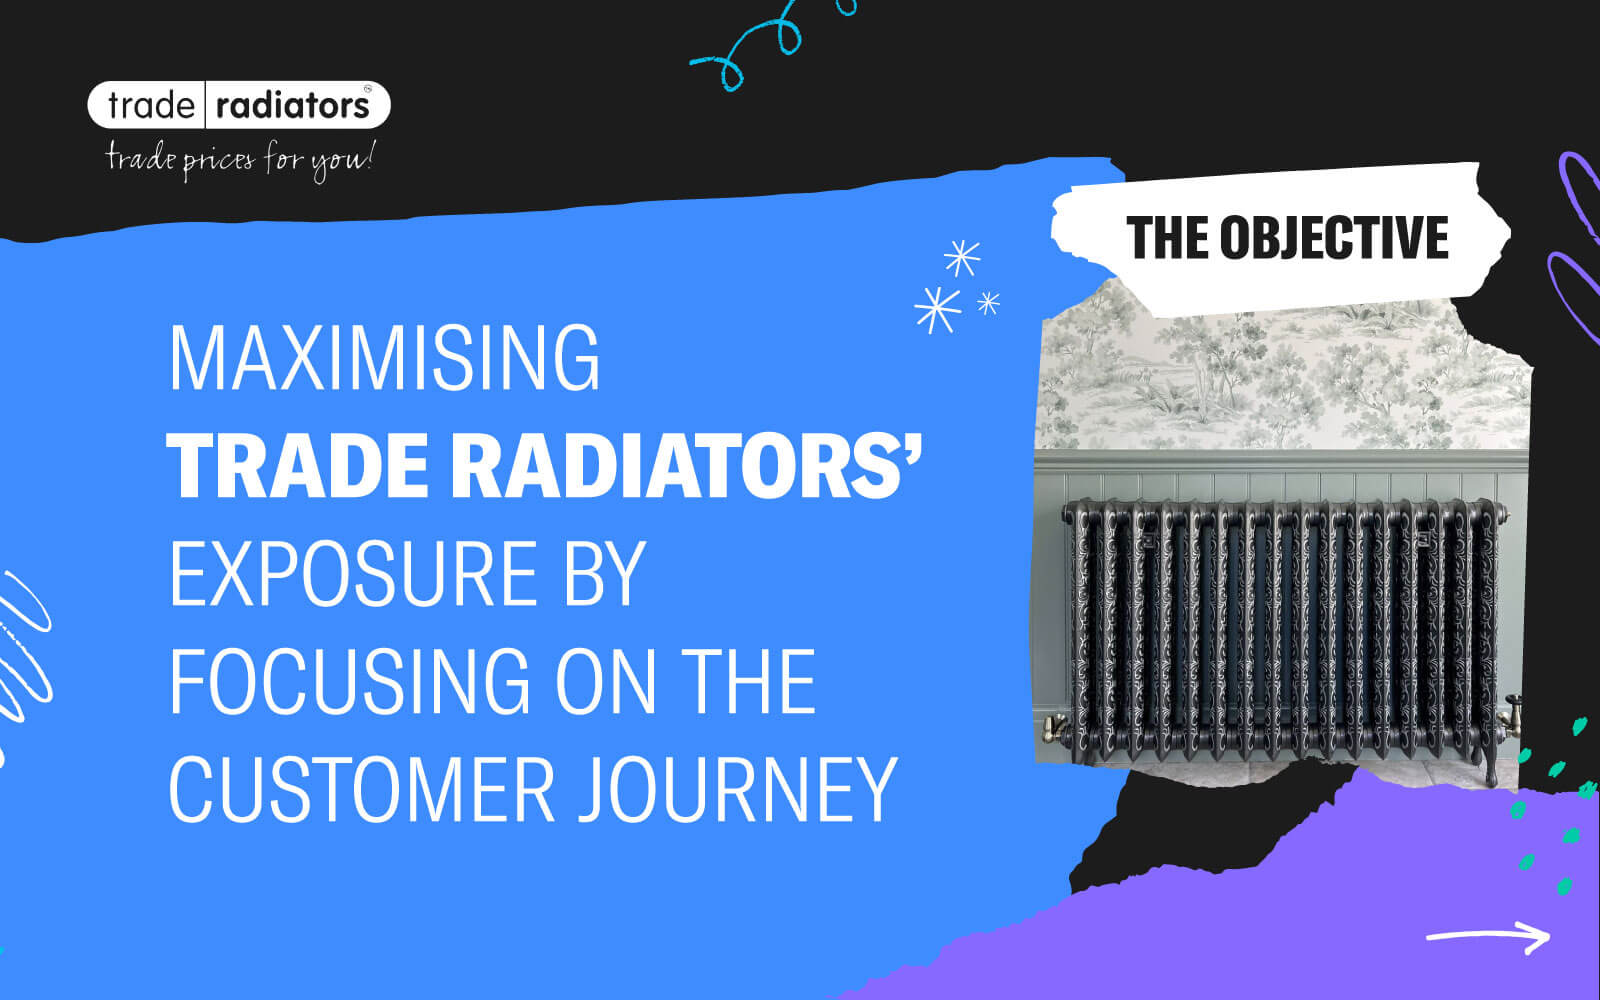 Trade-radiators-1